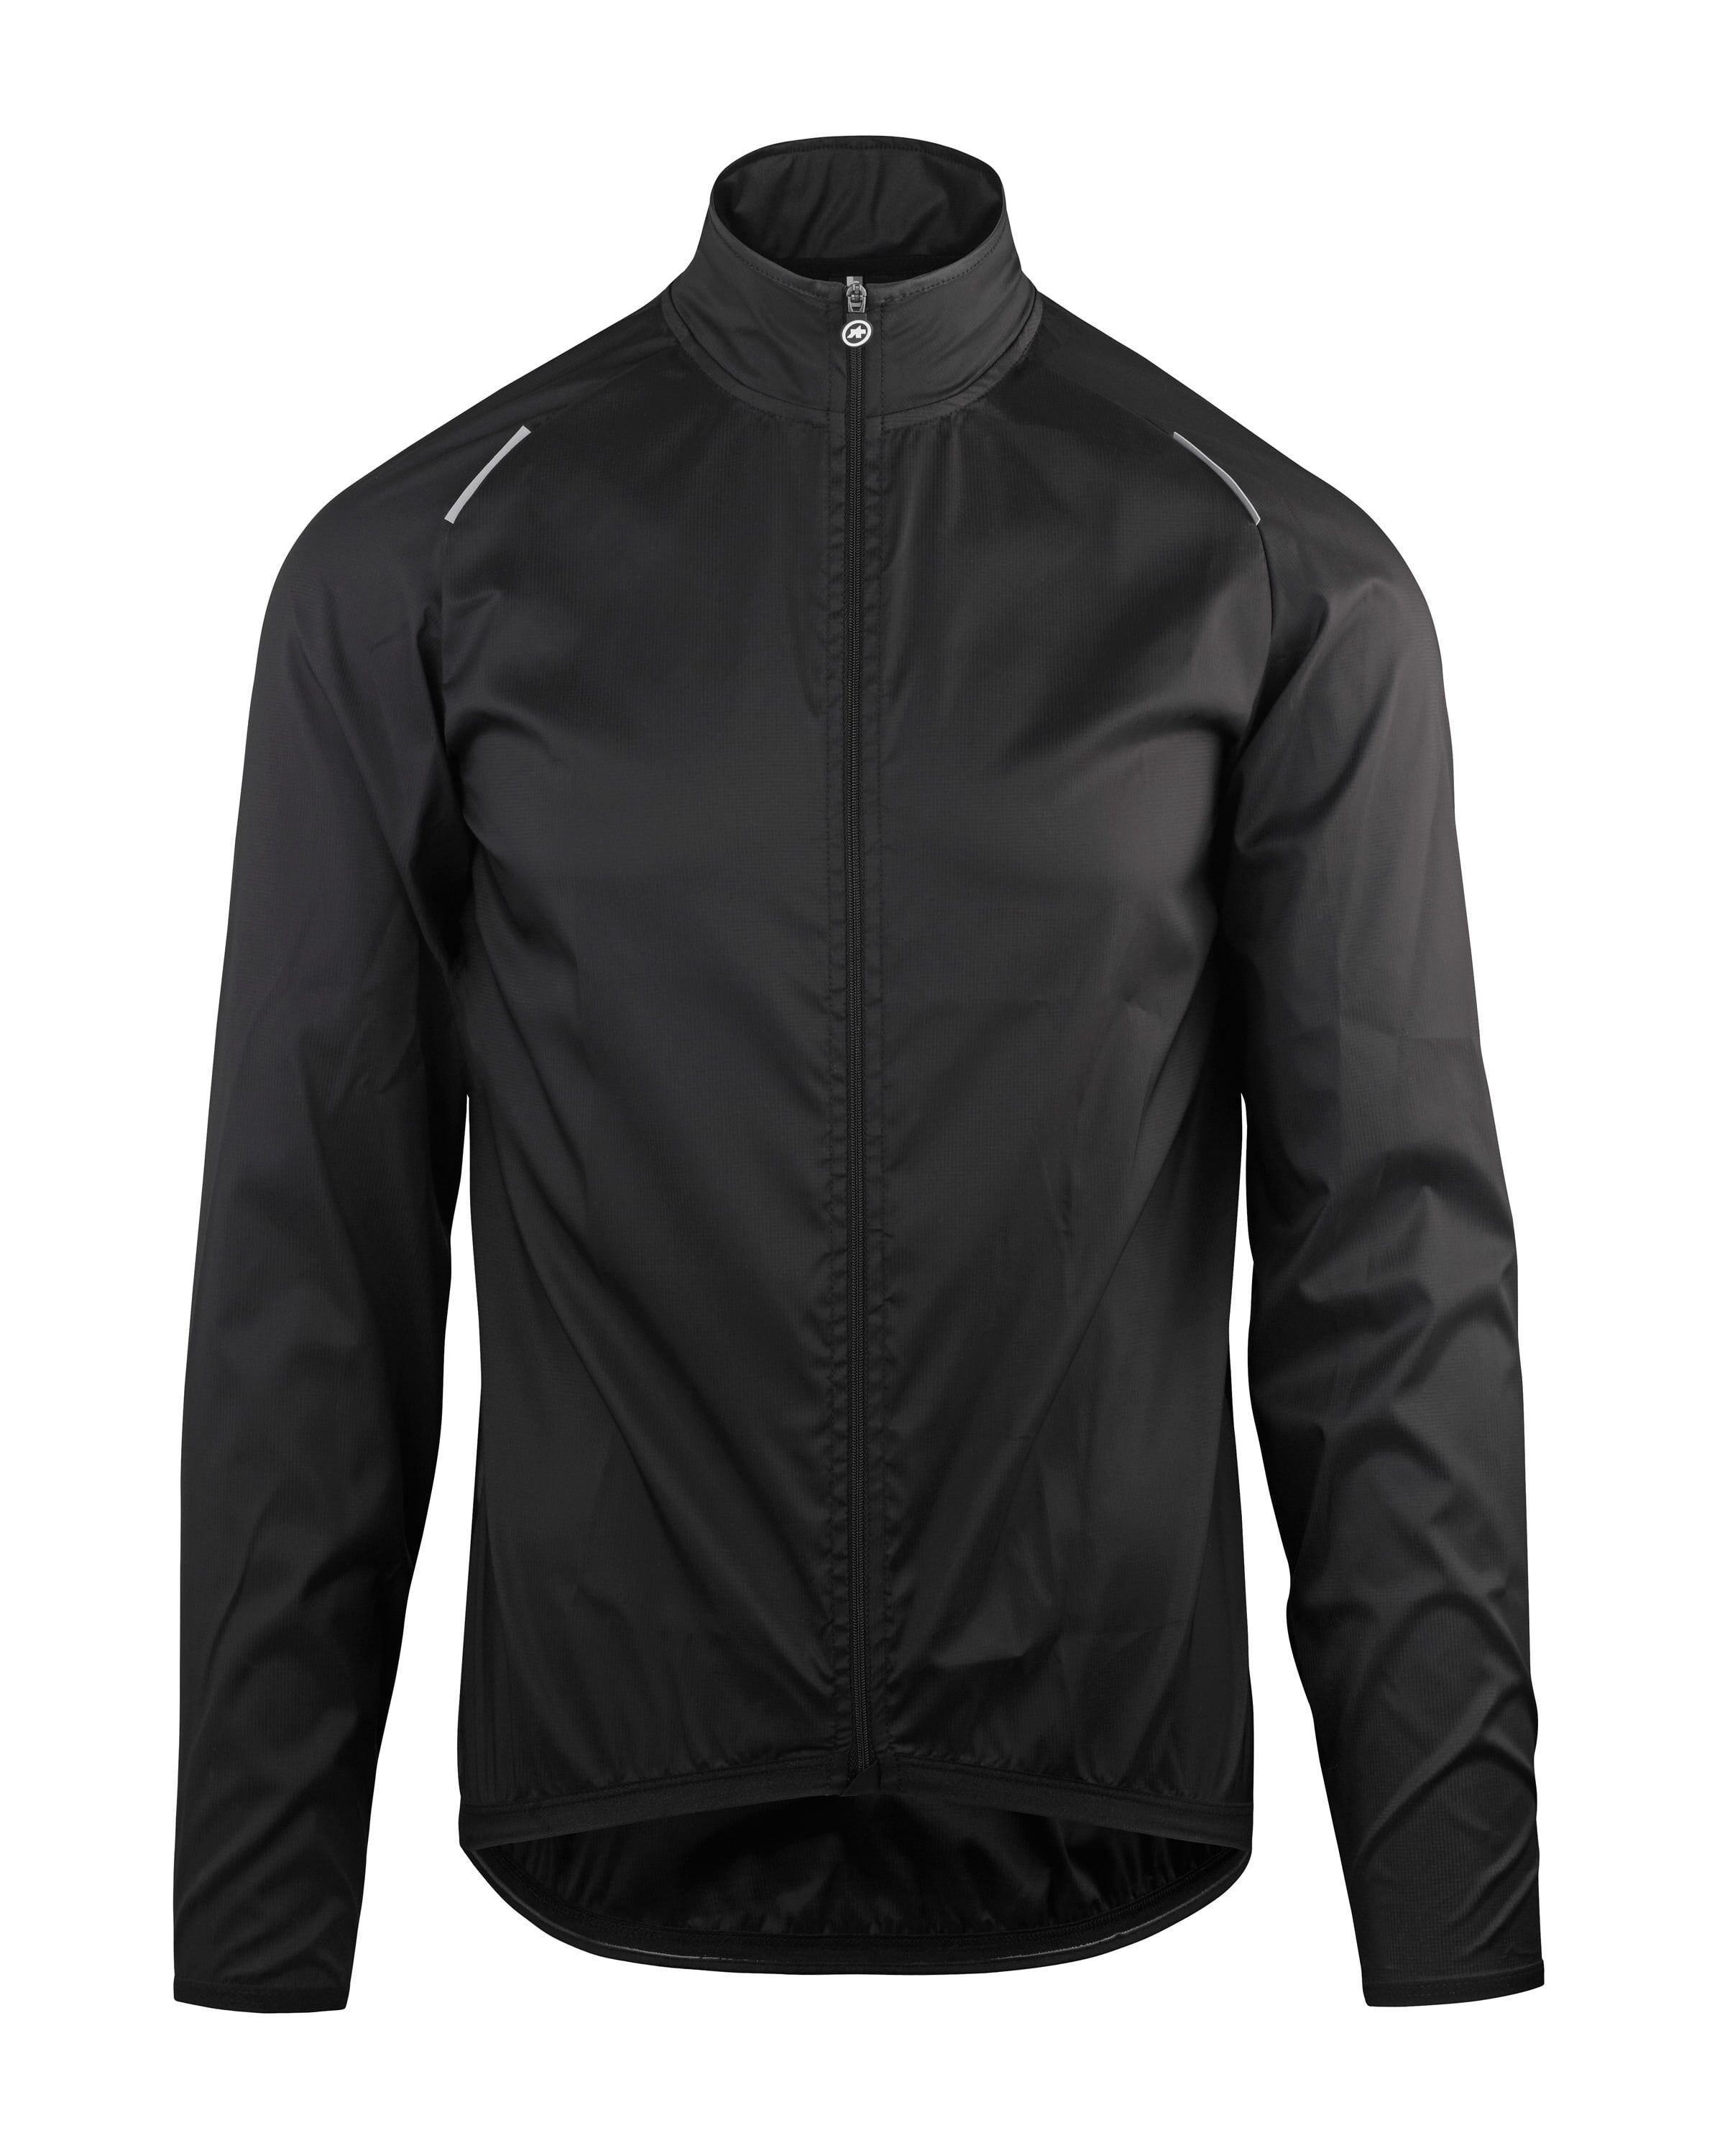 Assos Mille GT Wind Jacket - Cycling windproof jacket - Men's